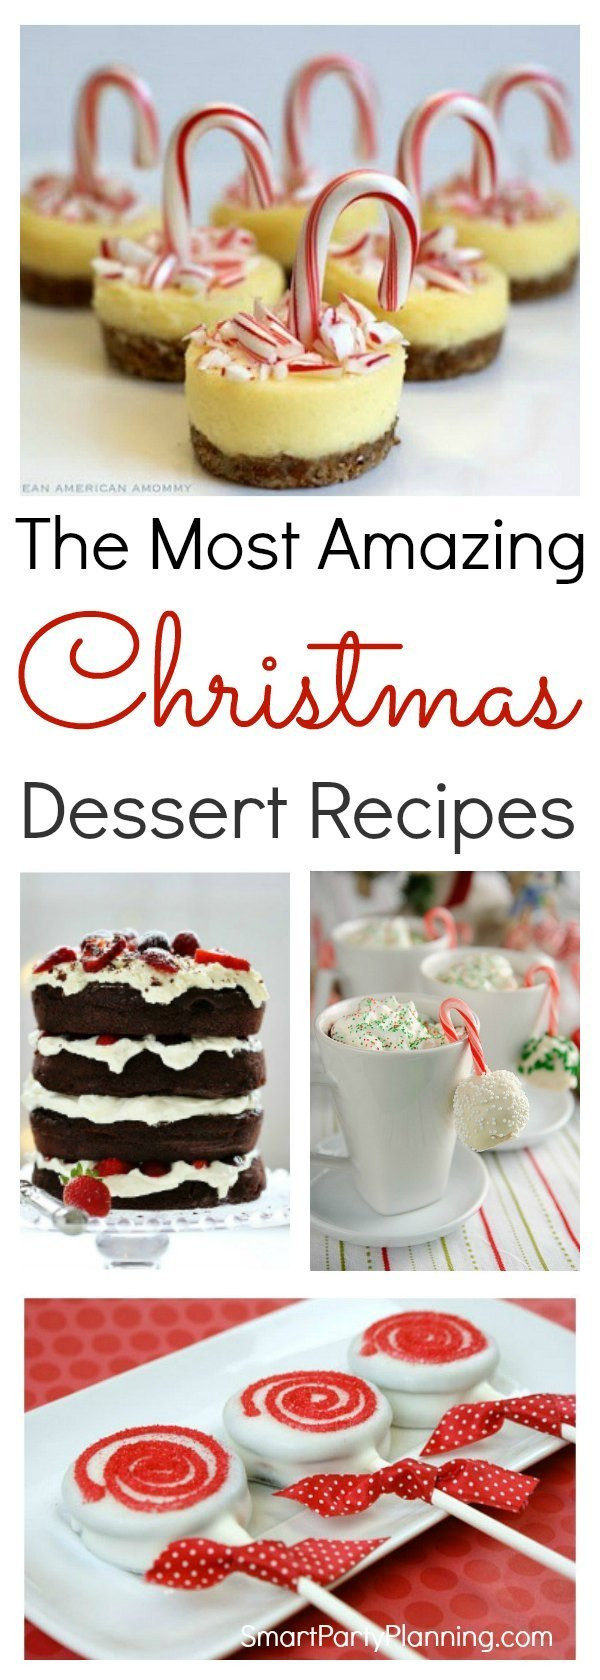 Amazing Christmas Desserts
 The Most Amazing Christmas Dessert Ideas